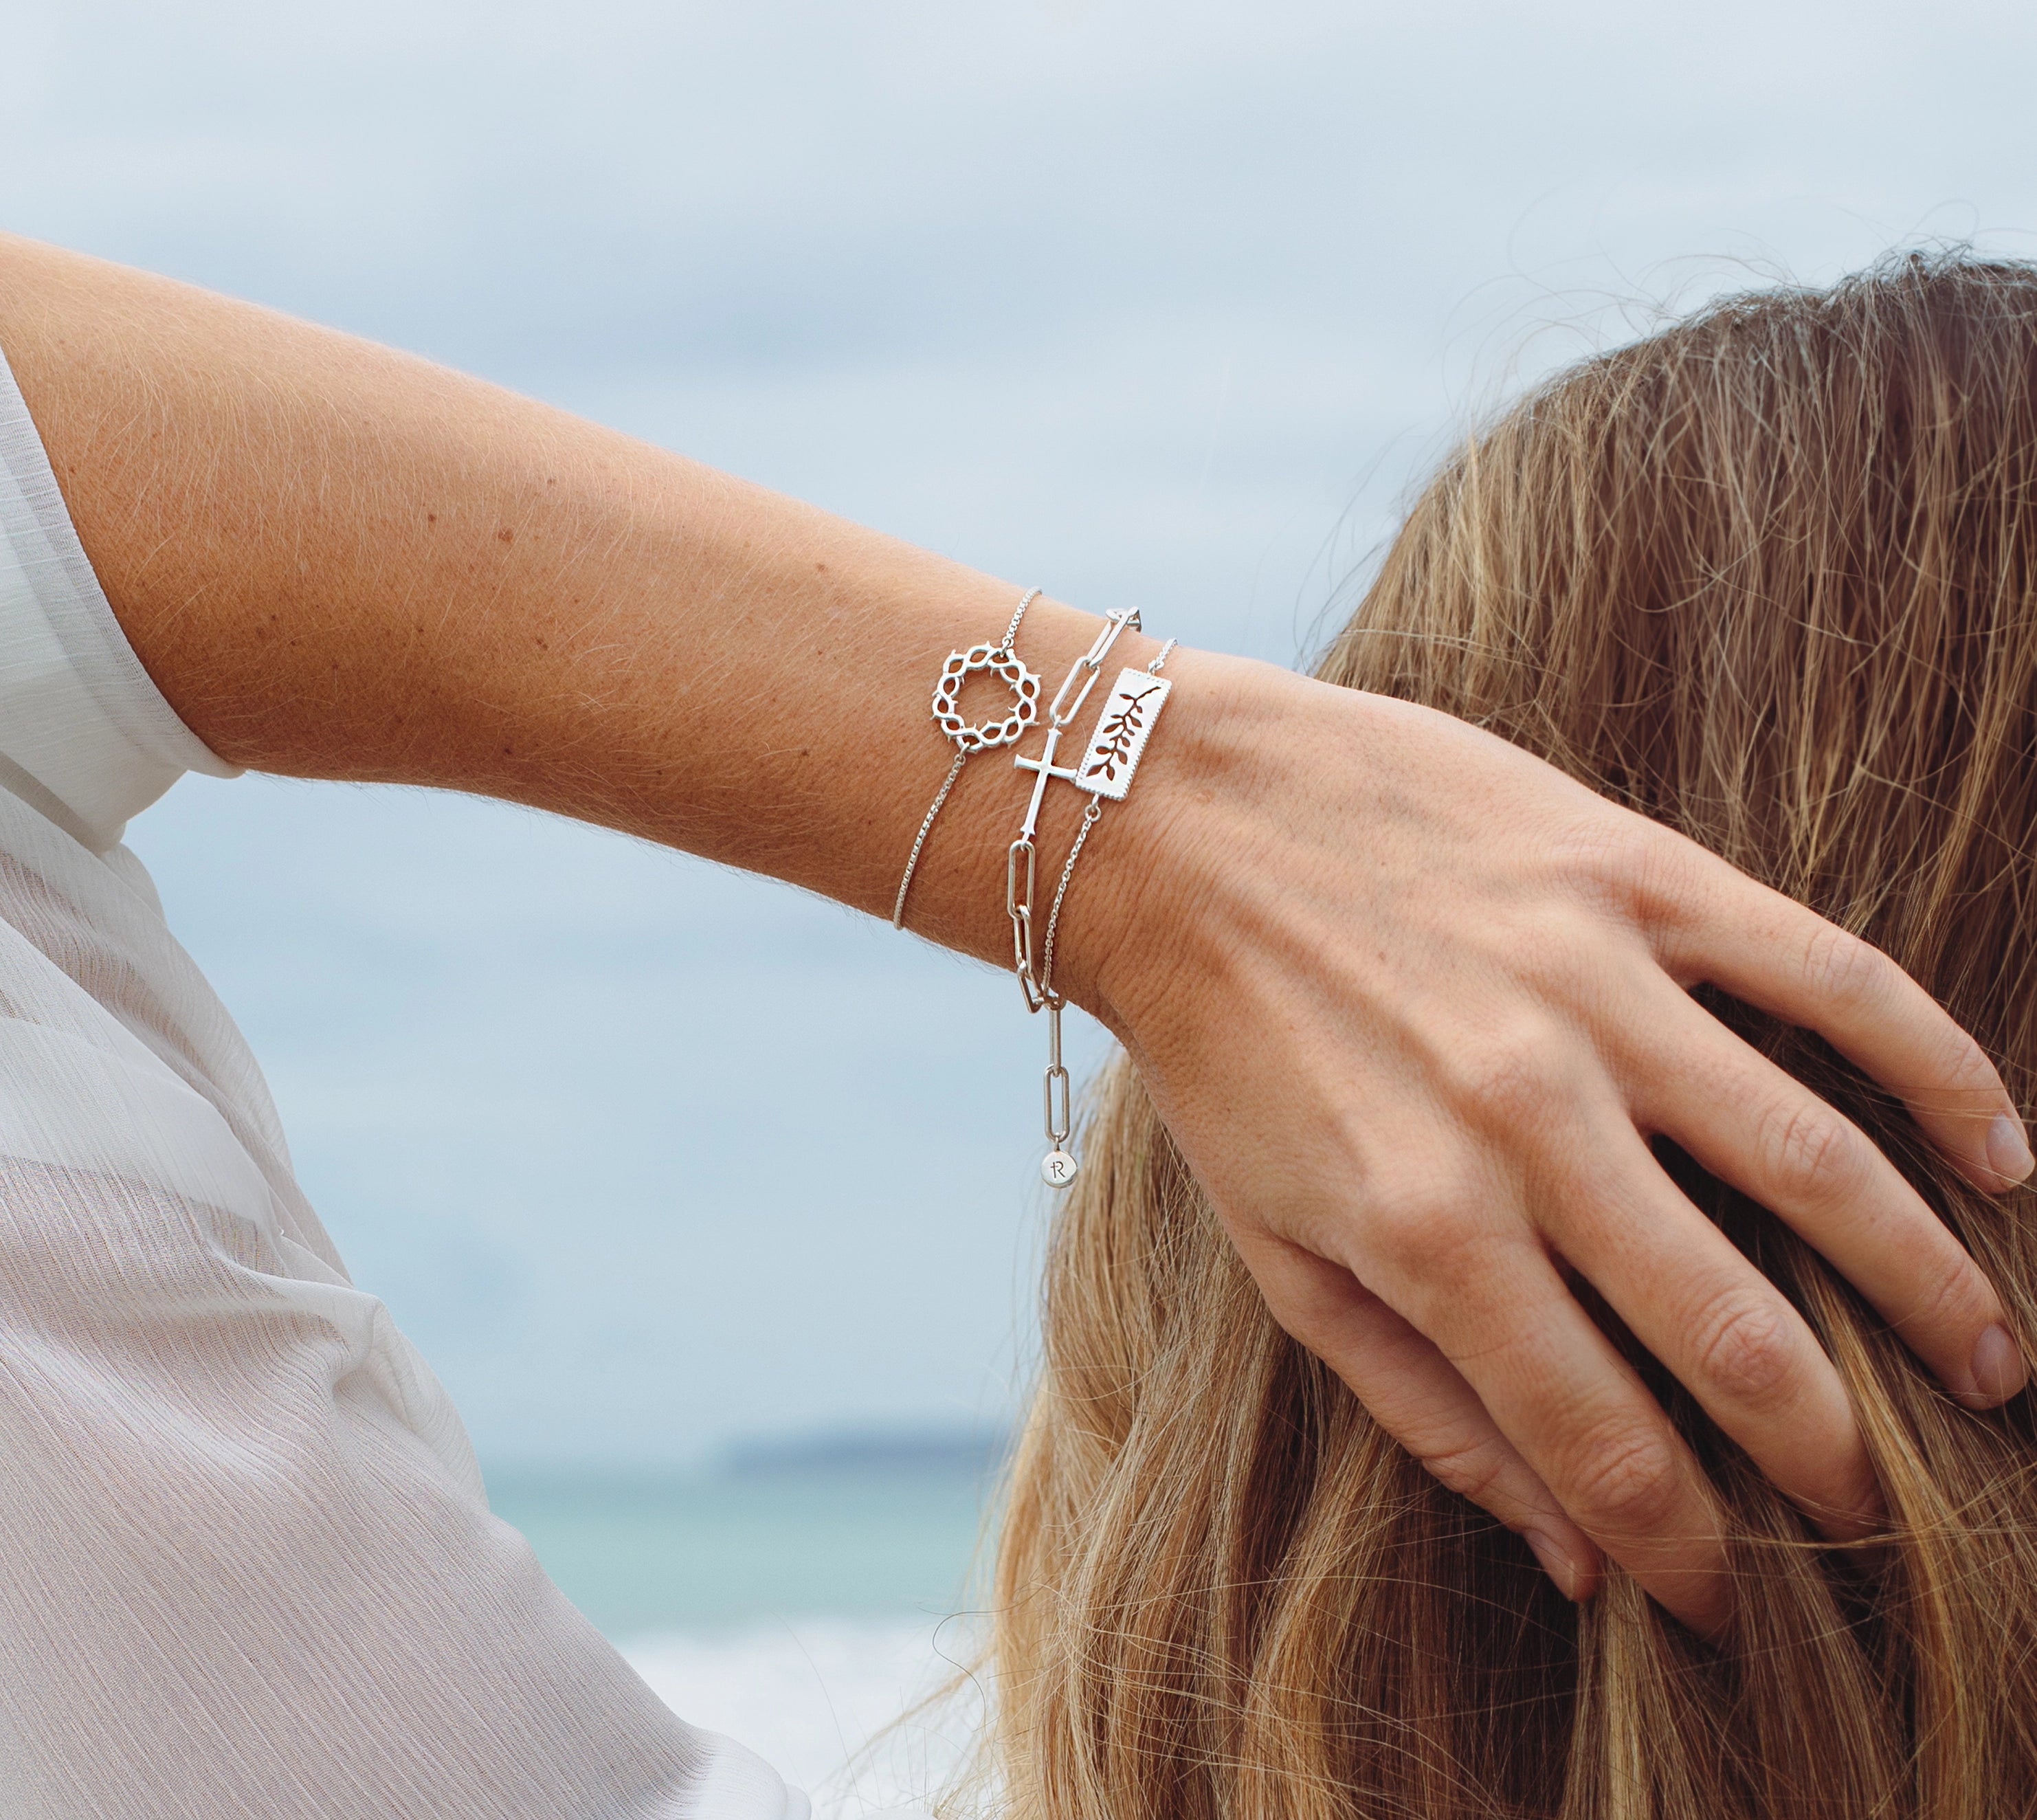 Christian woman wearing faith inspired bracelets by Rizen Jewelry